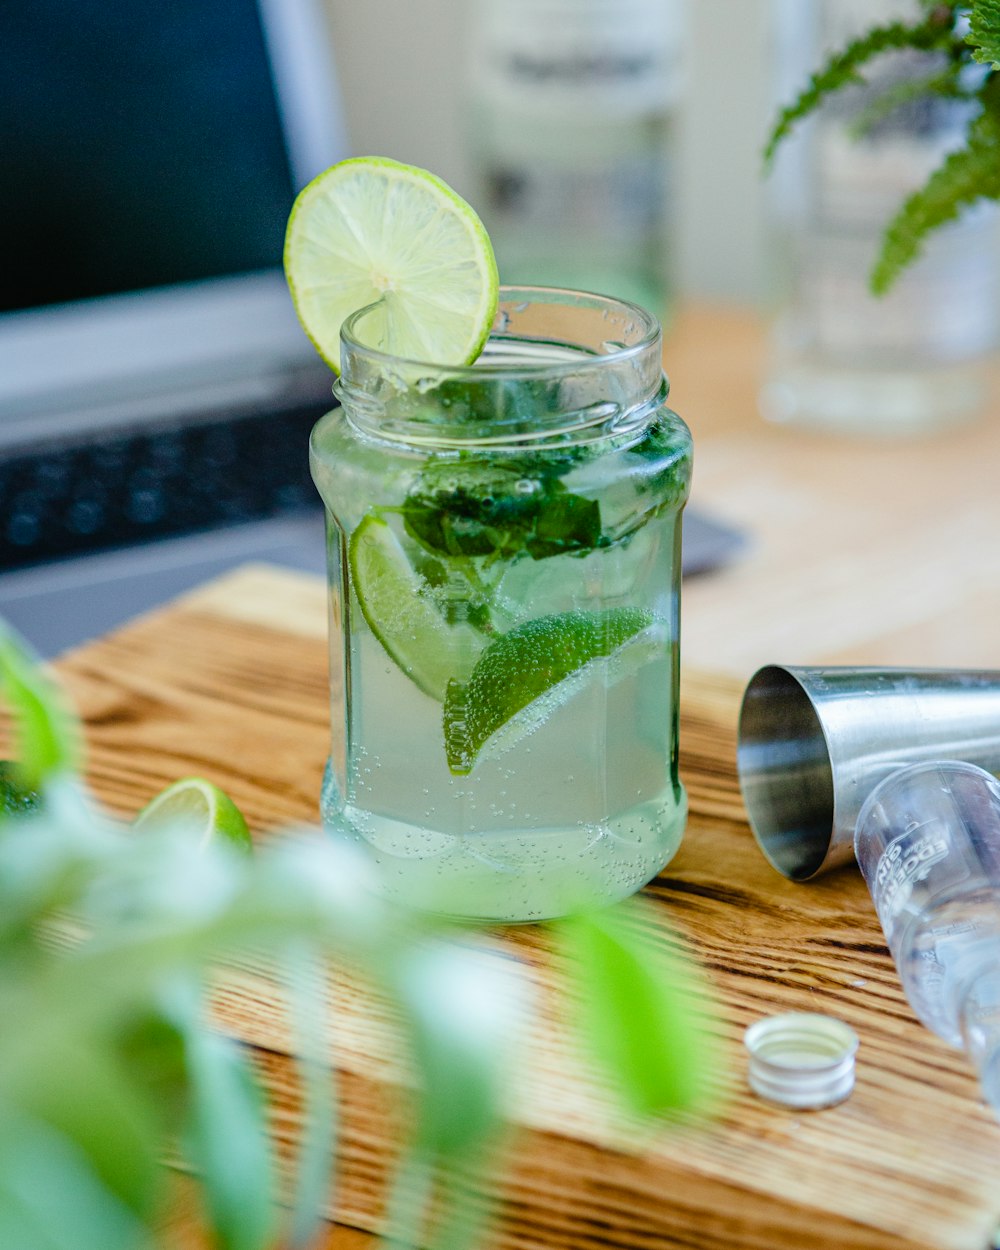 clear glass jar with green liquid and sliced lemon